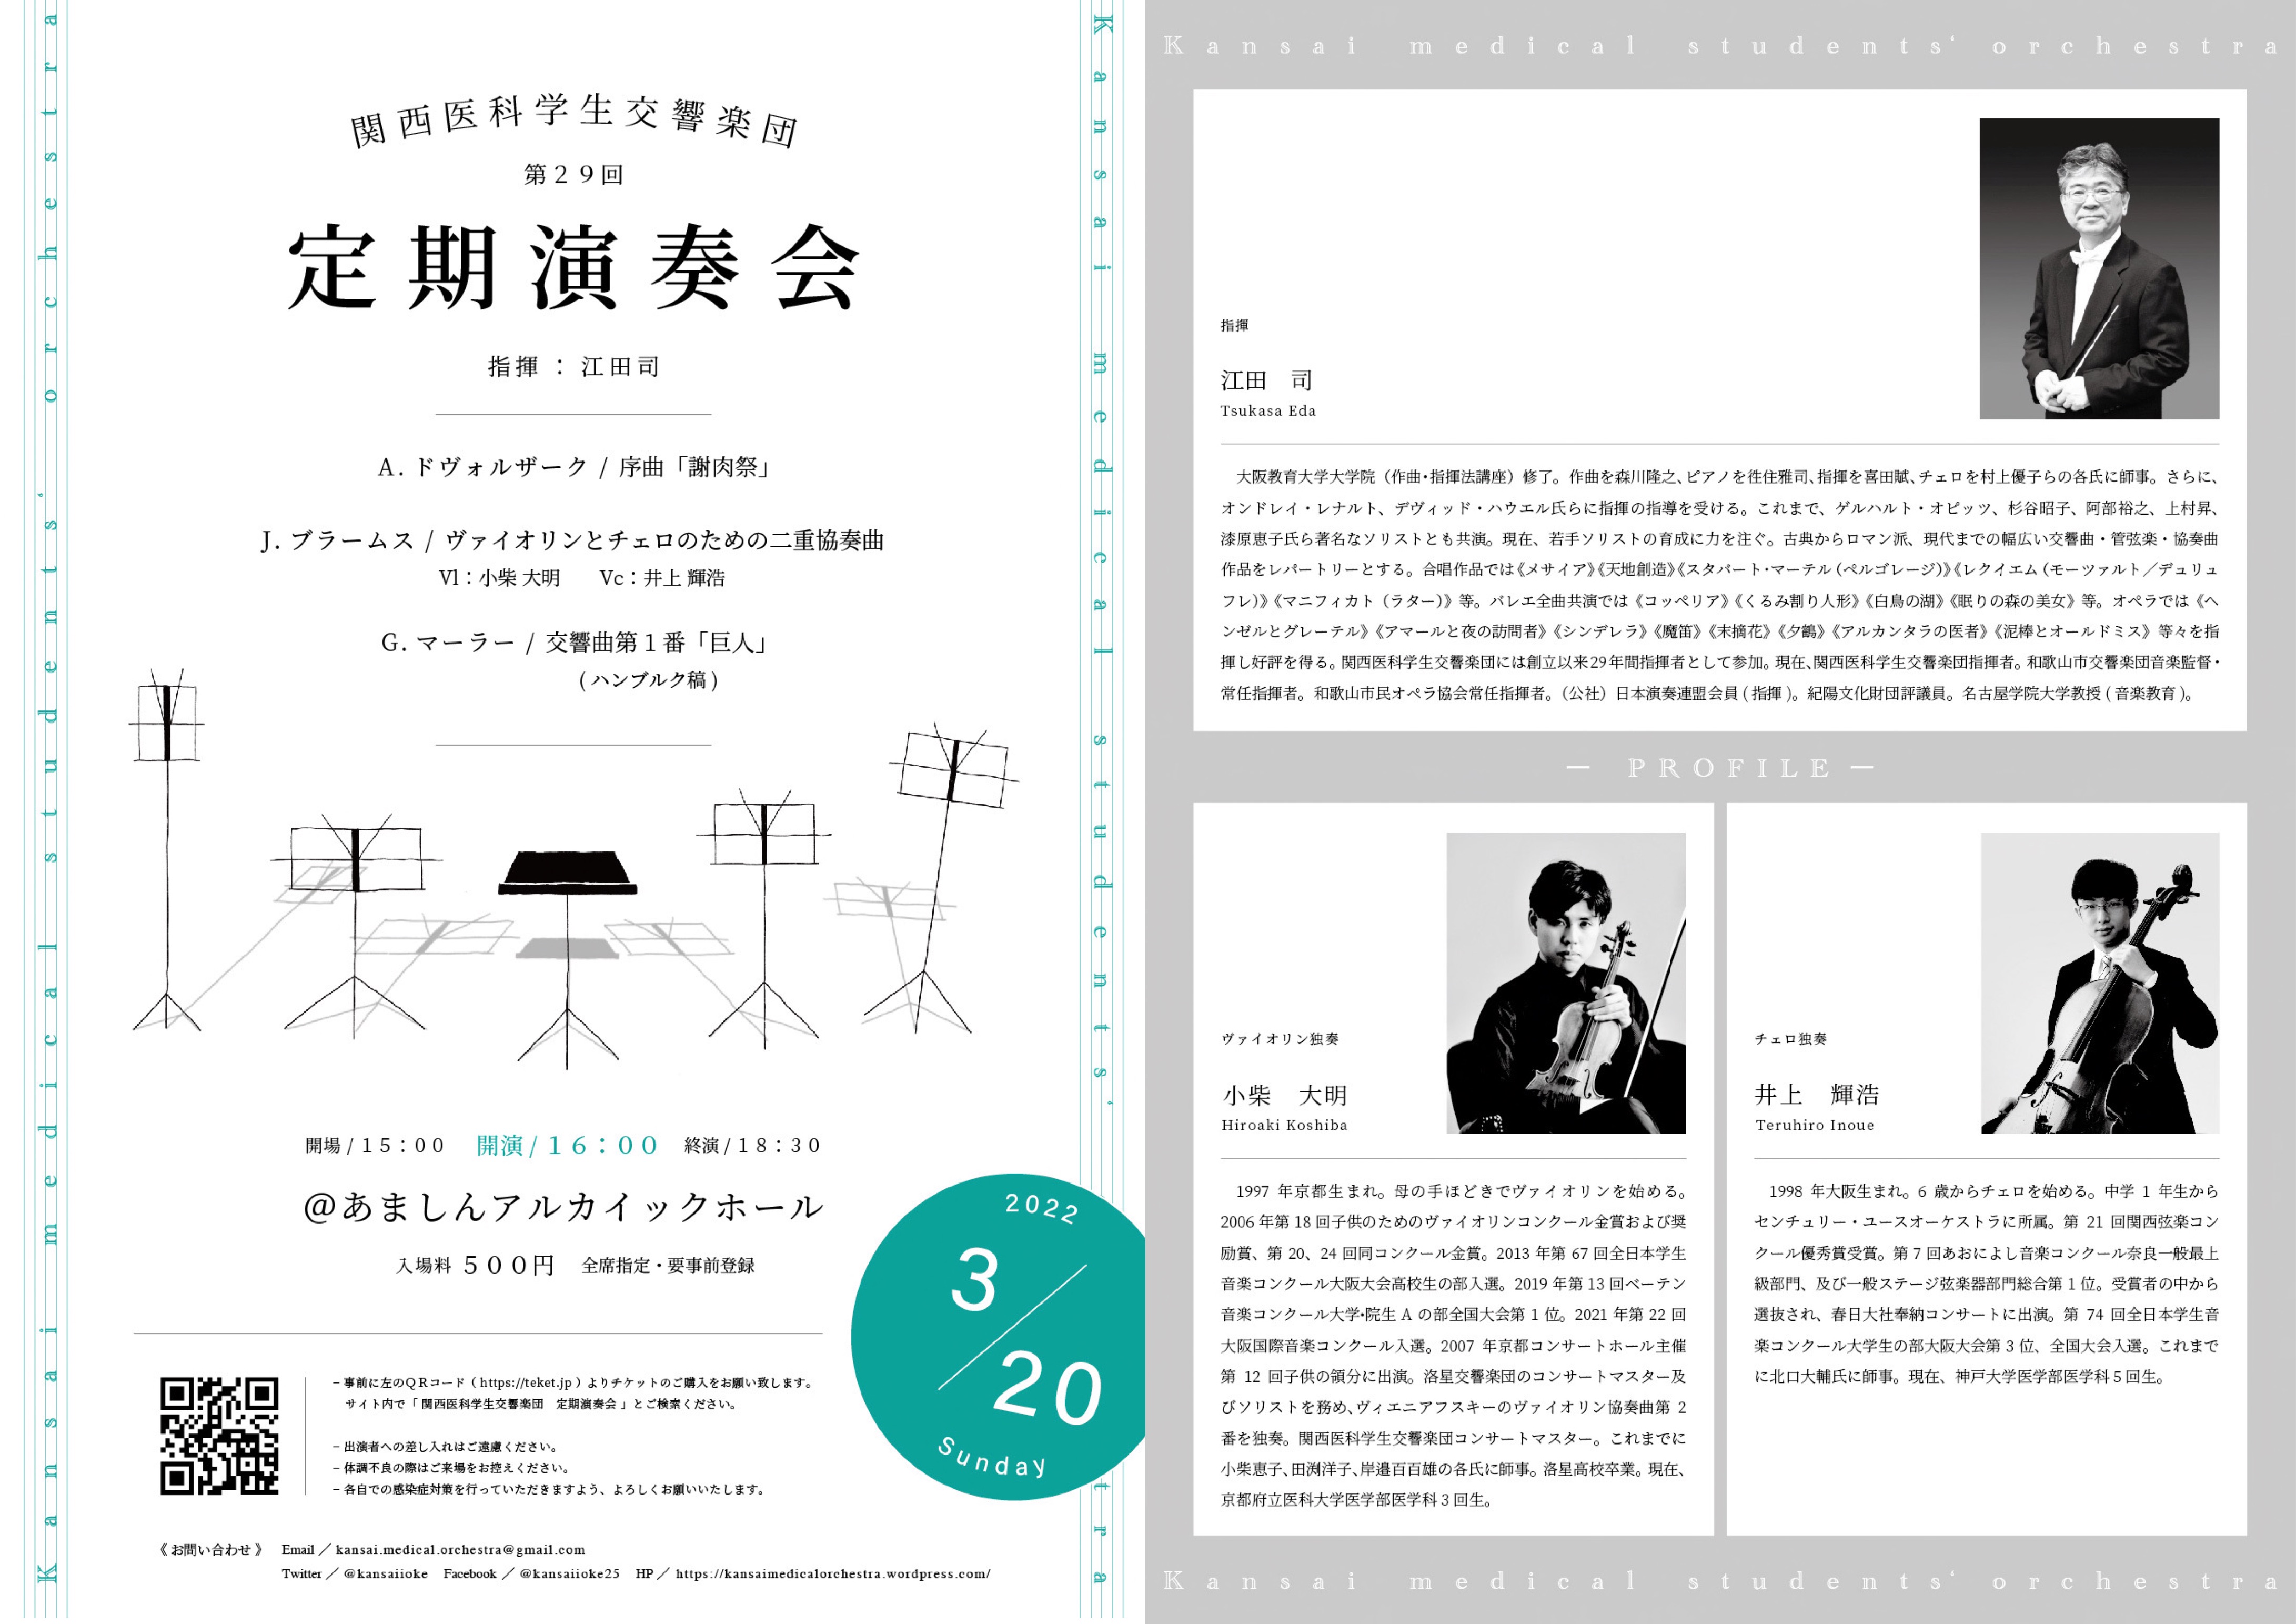 関西医科学生交響楽団第29回定期演奏会のフライヤー画像